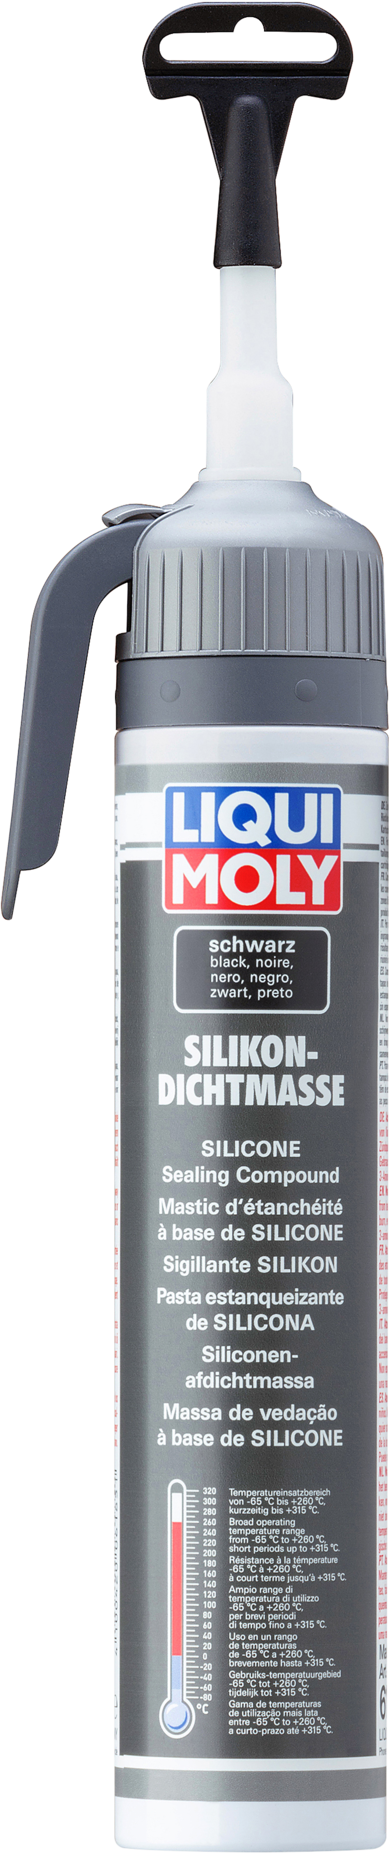 Liqui Moly Siliconen-afdichtmassa zwart, 6 x 200 ml detail 2